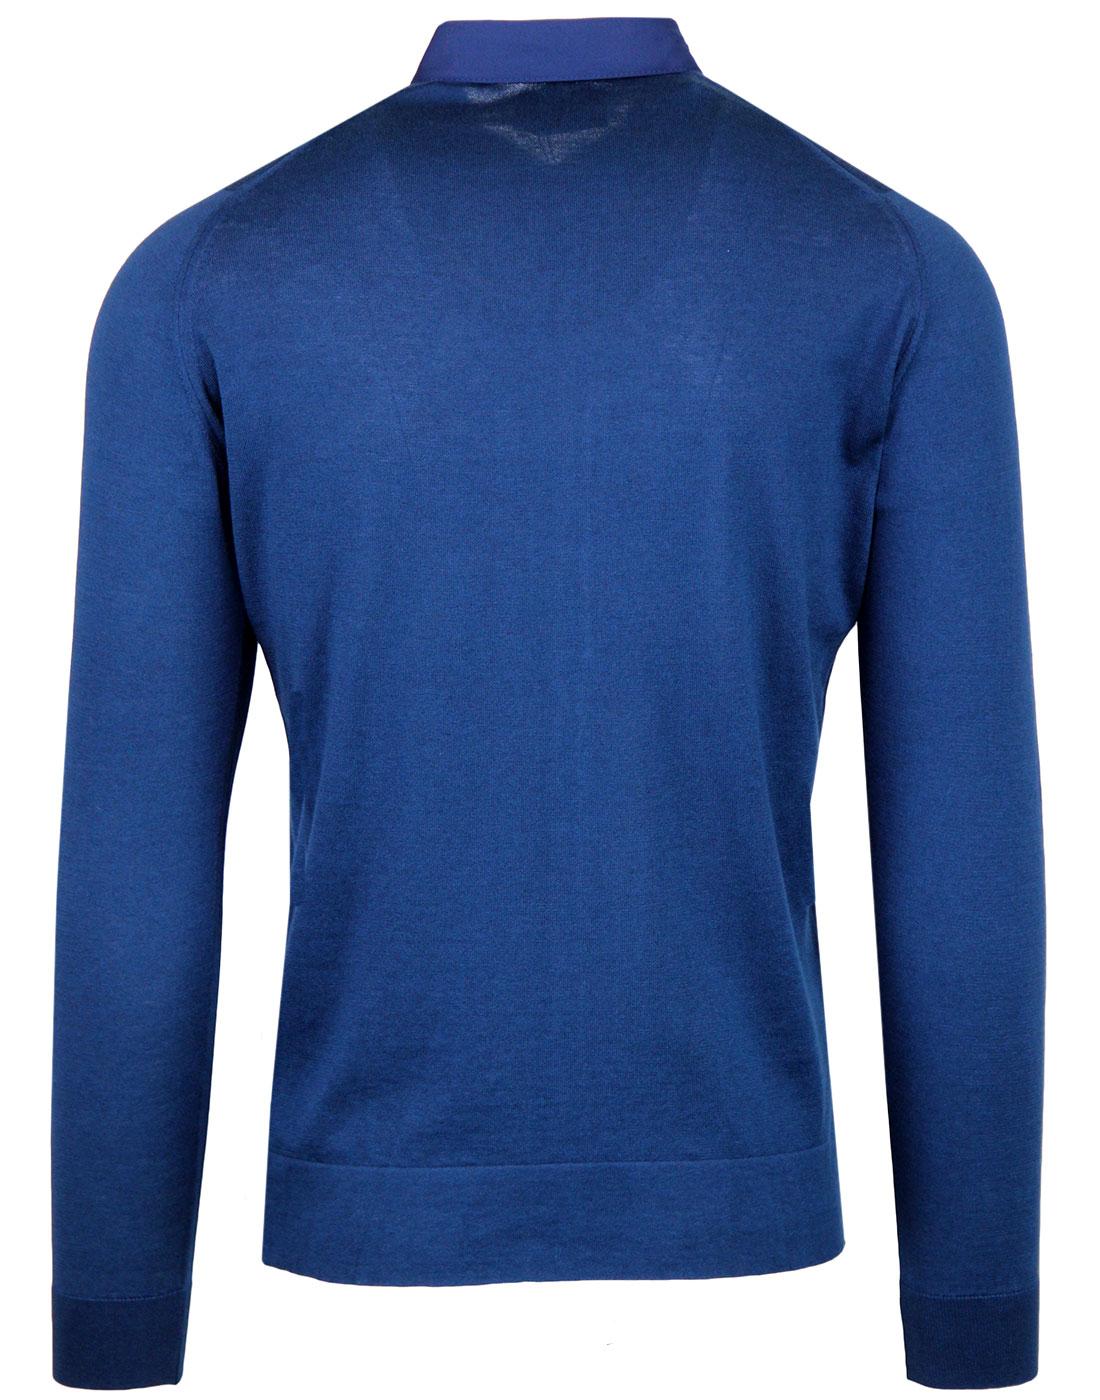 JOHN SMEDLEY Banwell Retro 60s Mod Knitted Shirt in Indigo